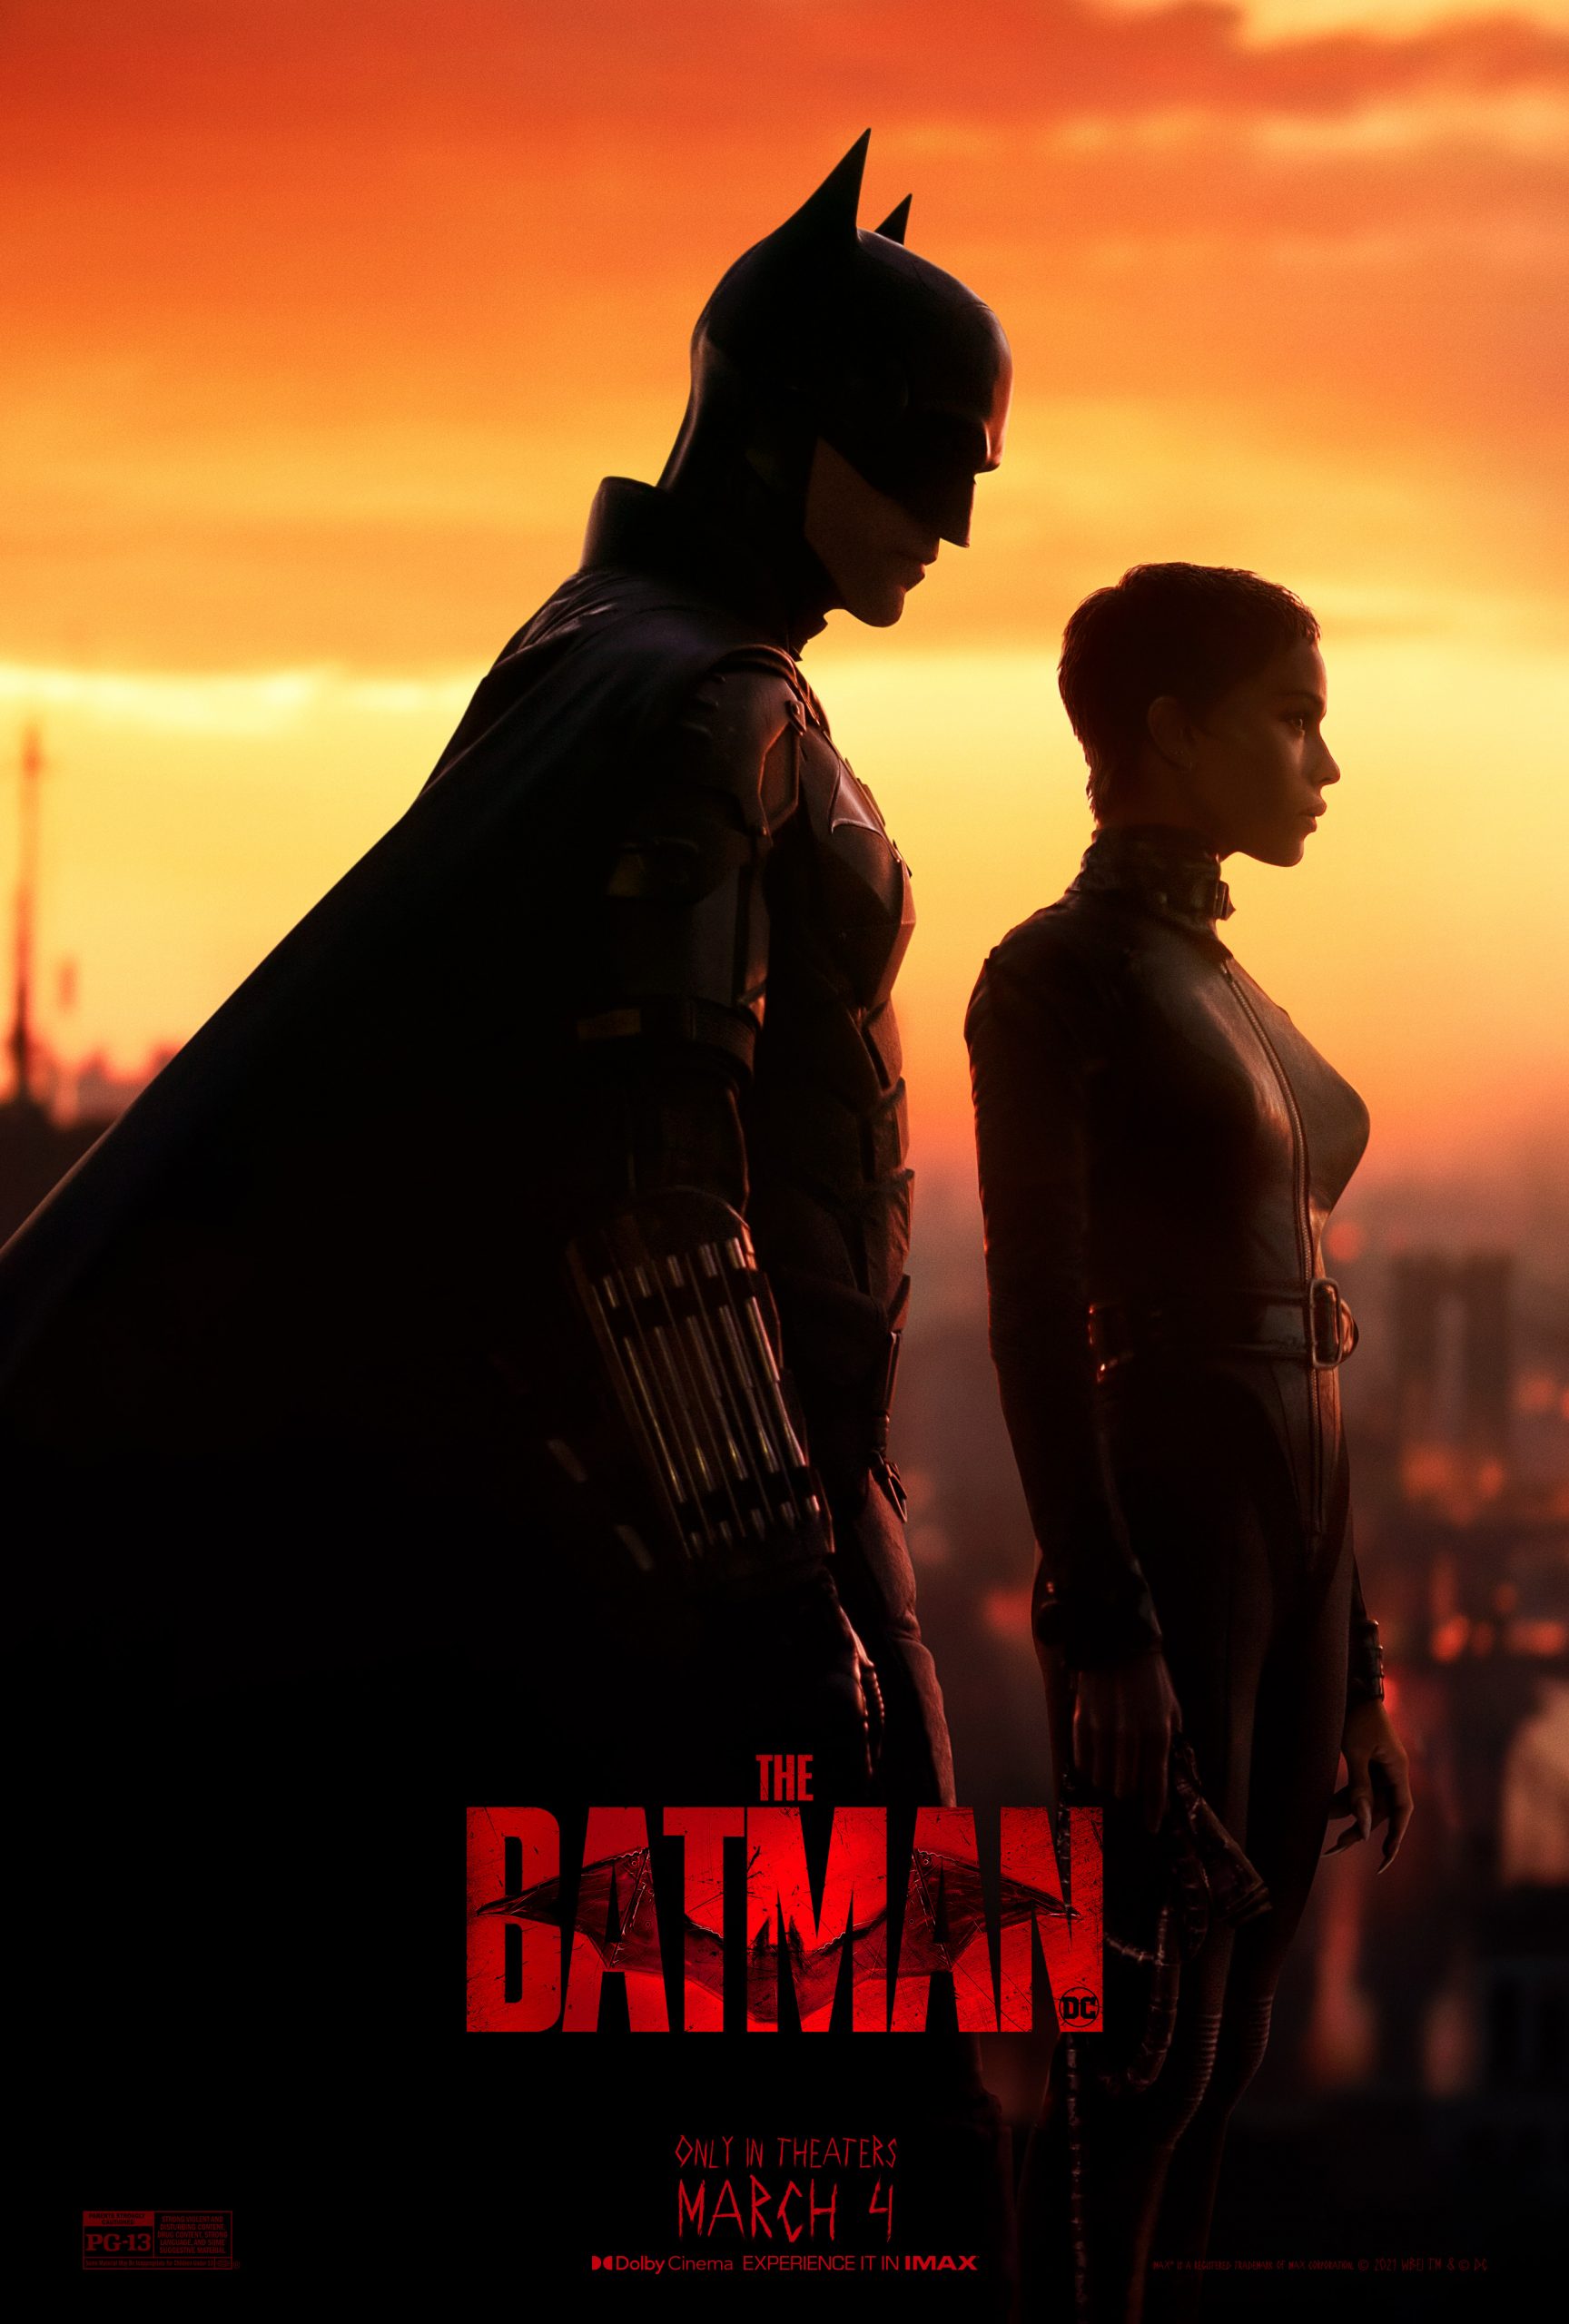 THE BATMAN 2 New Posters Debut (UPDATED) BATMAN ON FILM